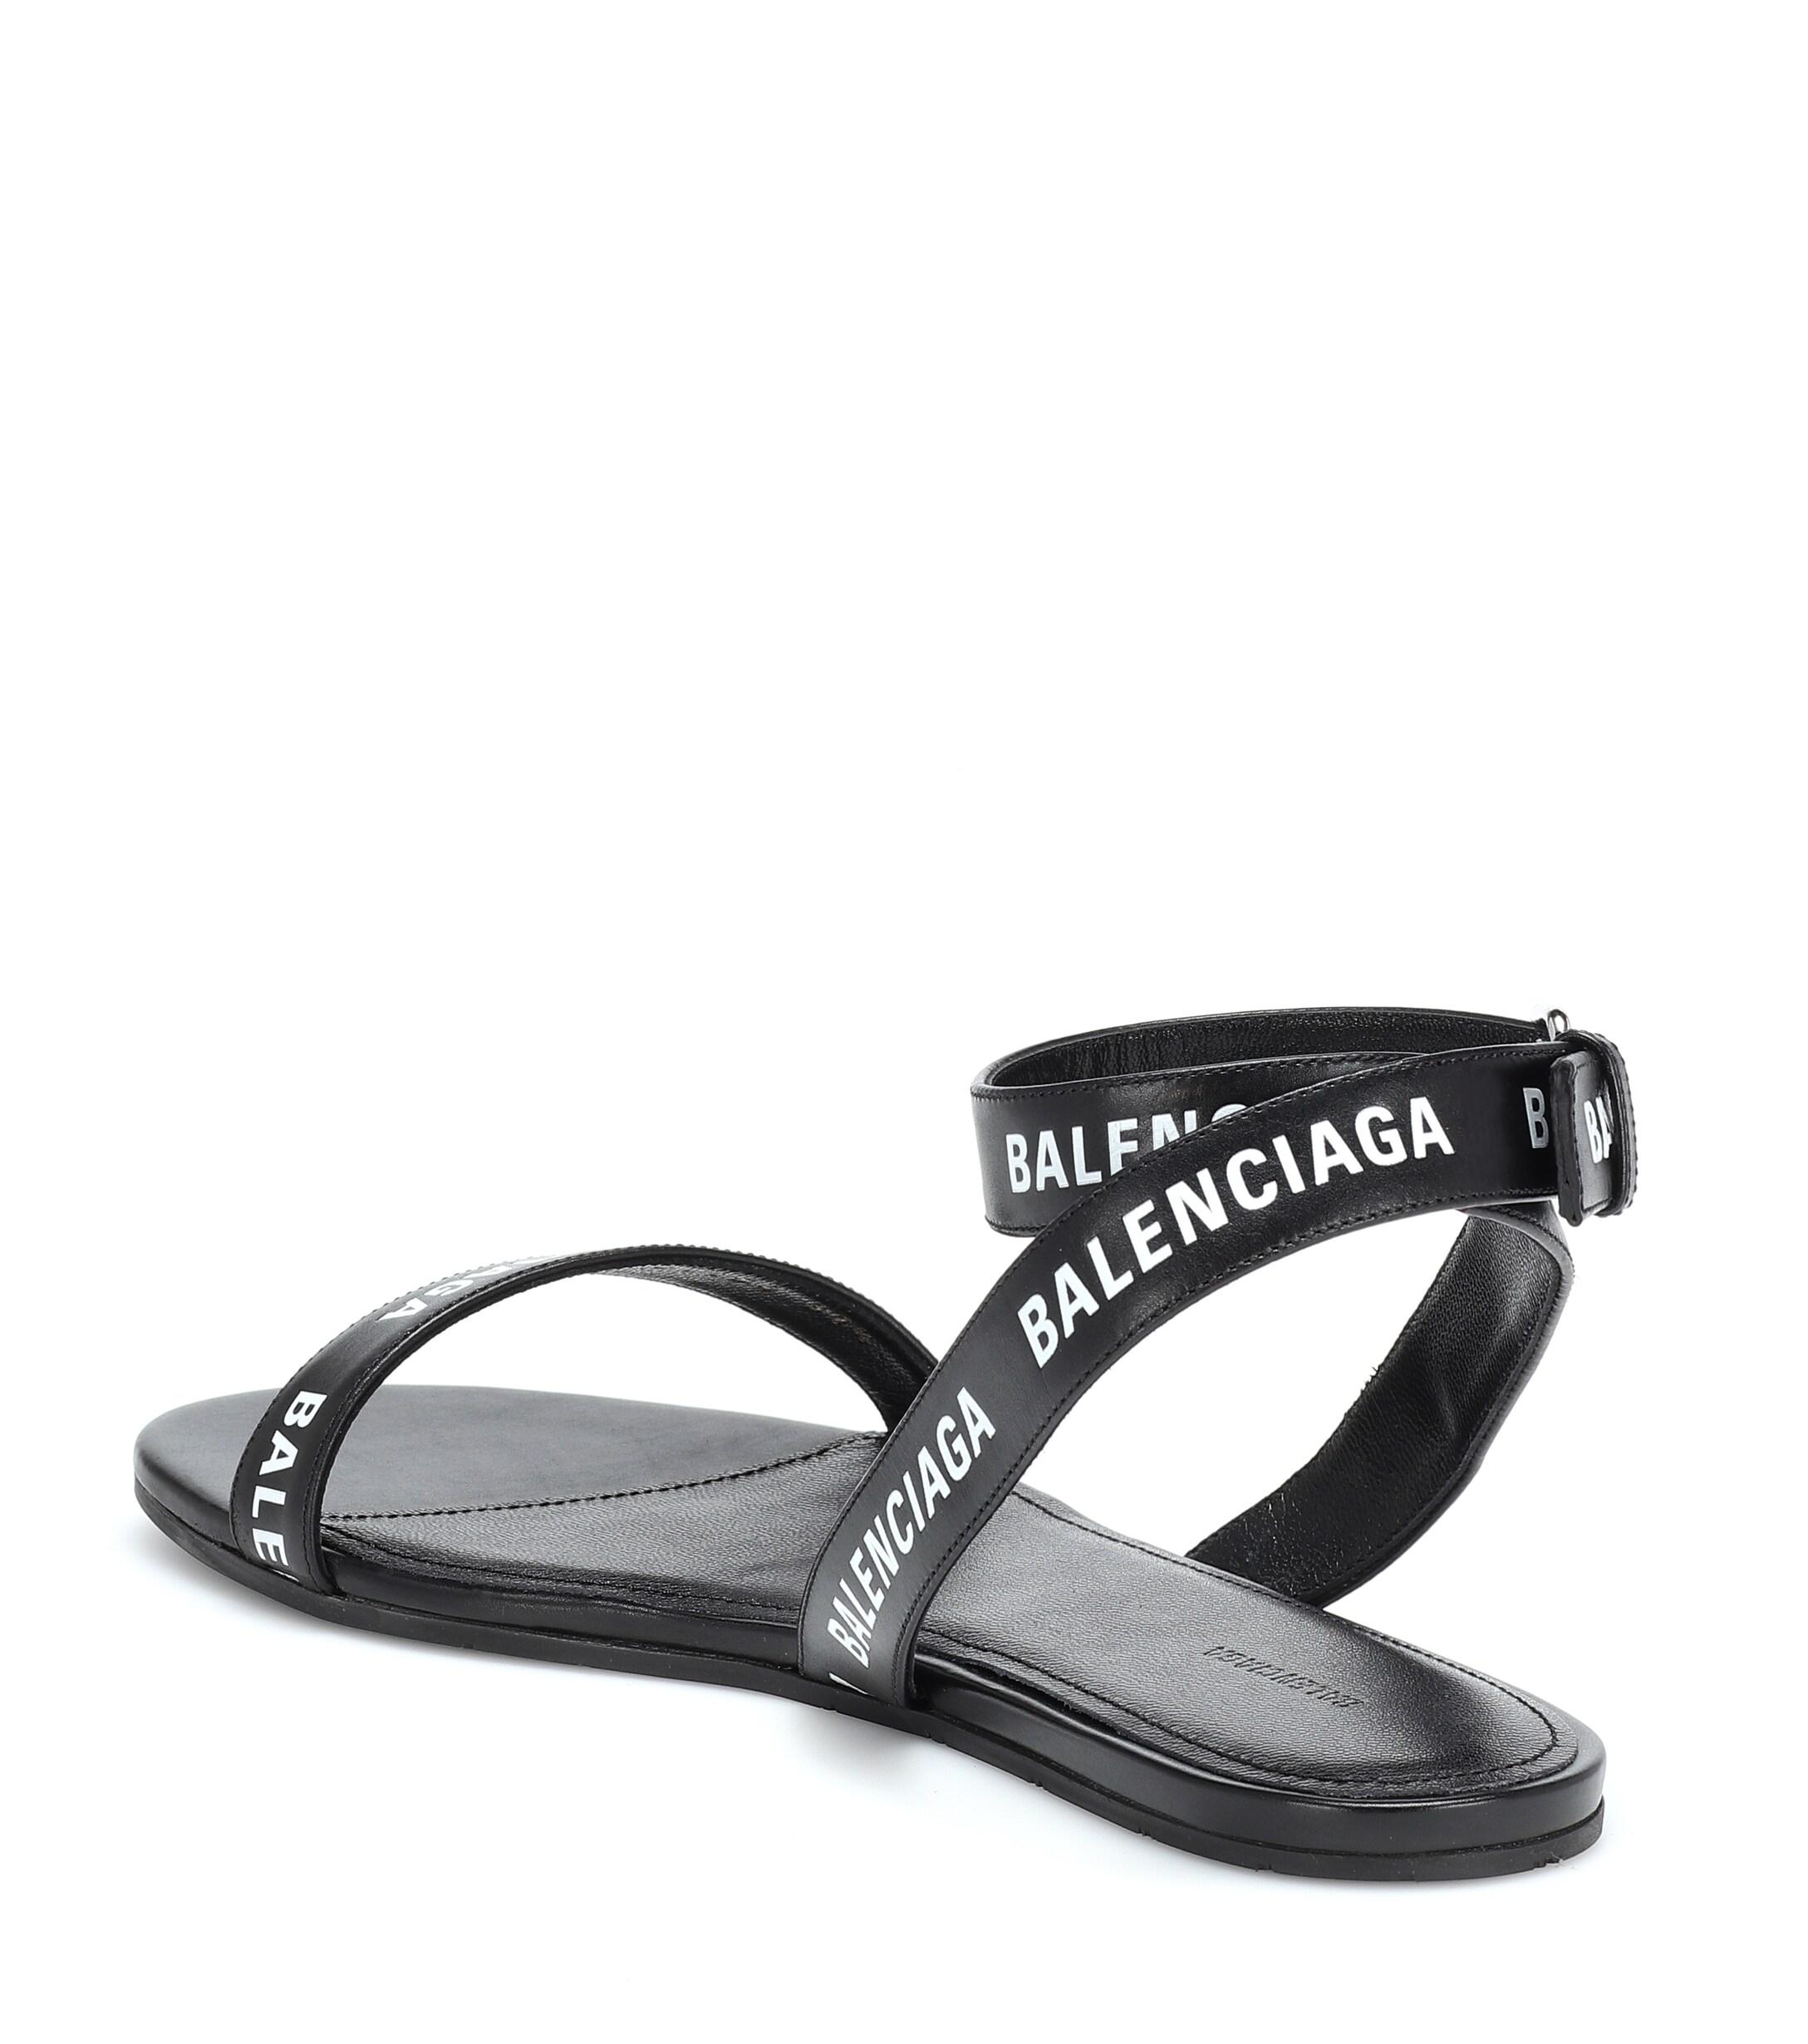 Balenciaga Printed Leather Sandals in Black | Lyst